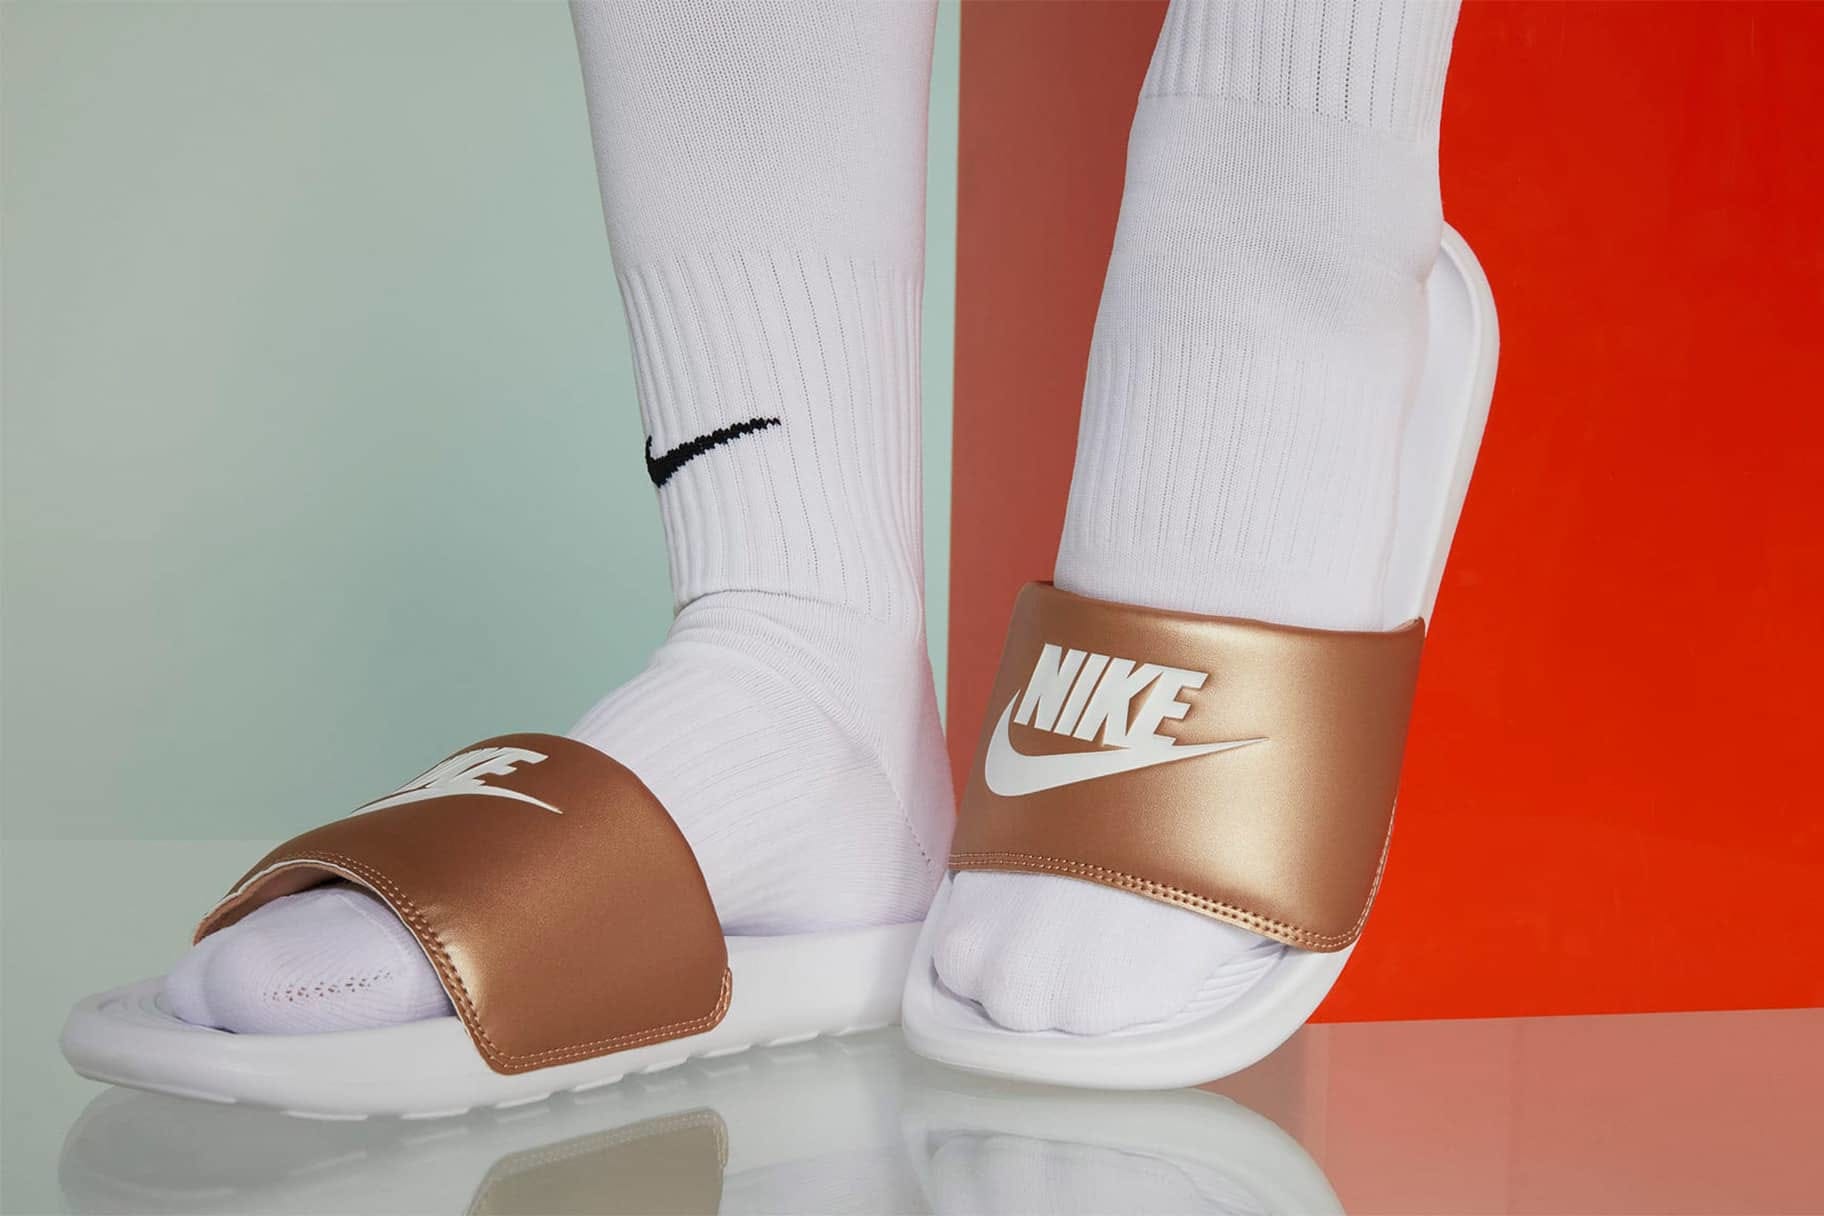 Chaussons Nike les plus confortables. Nike CH